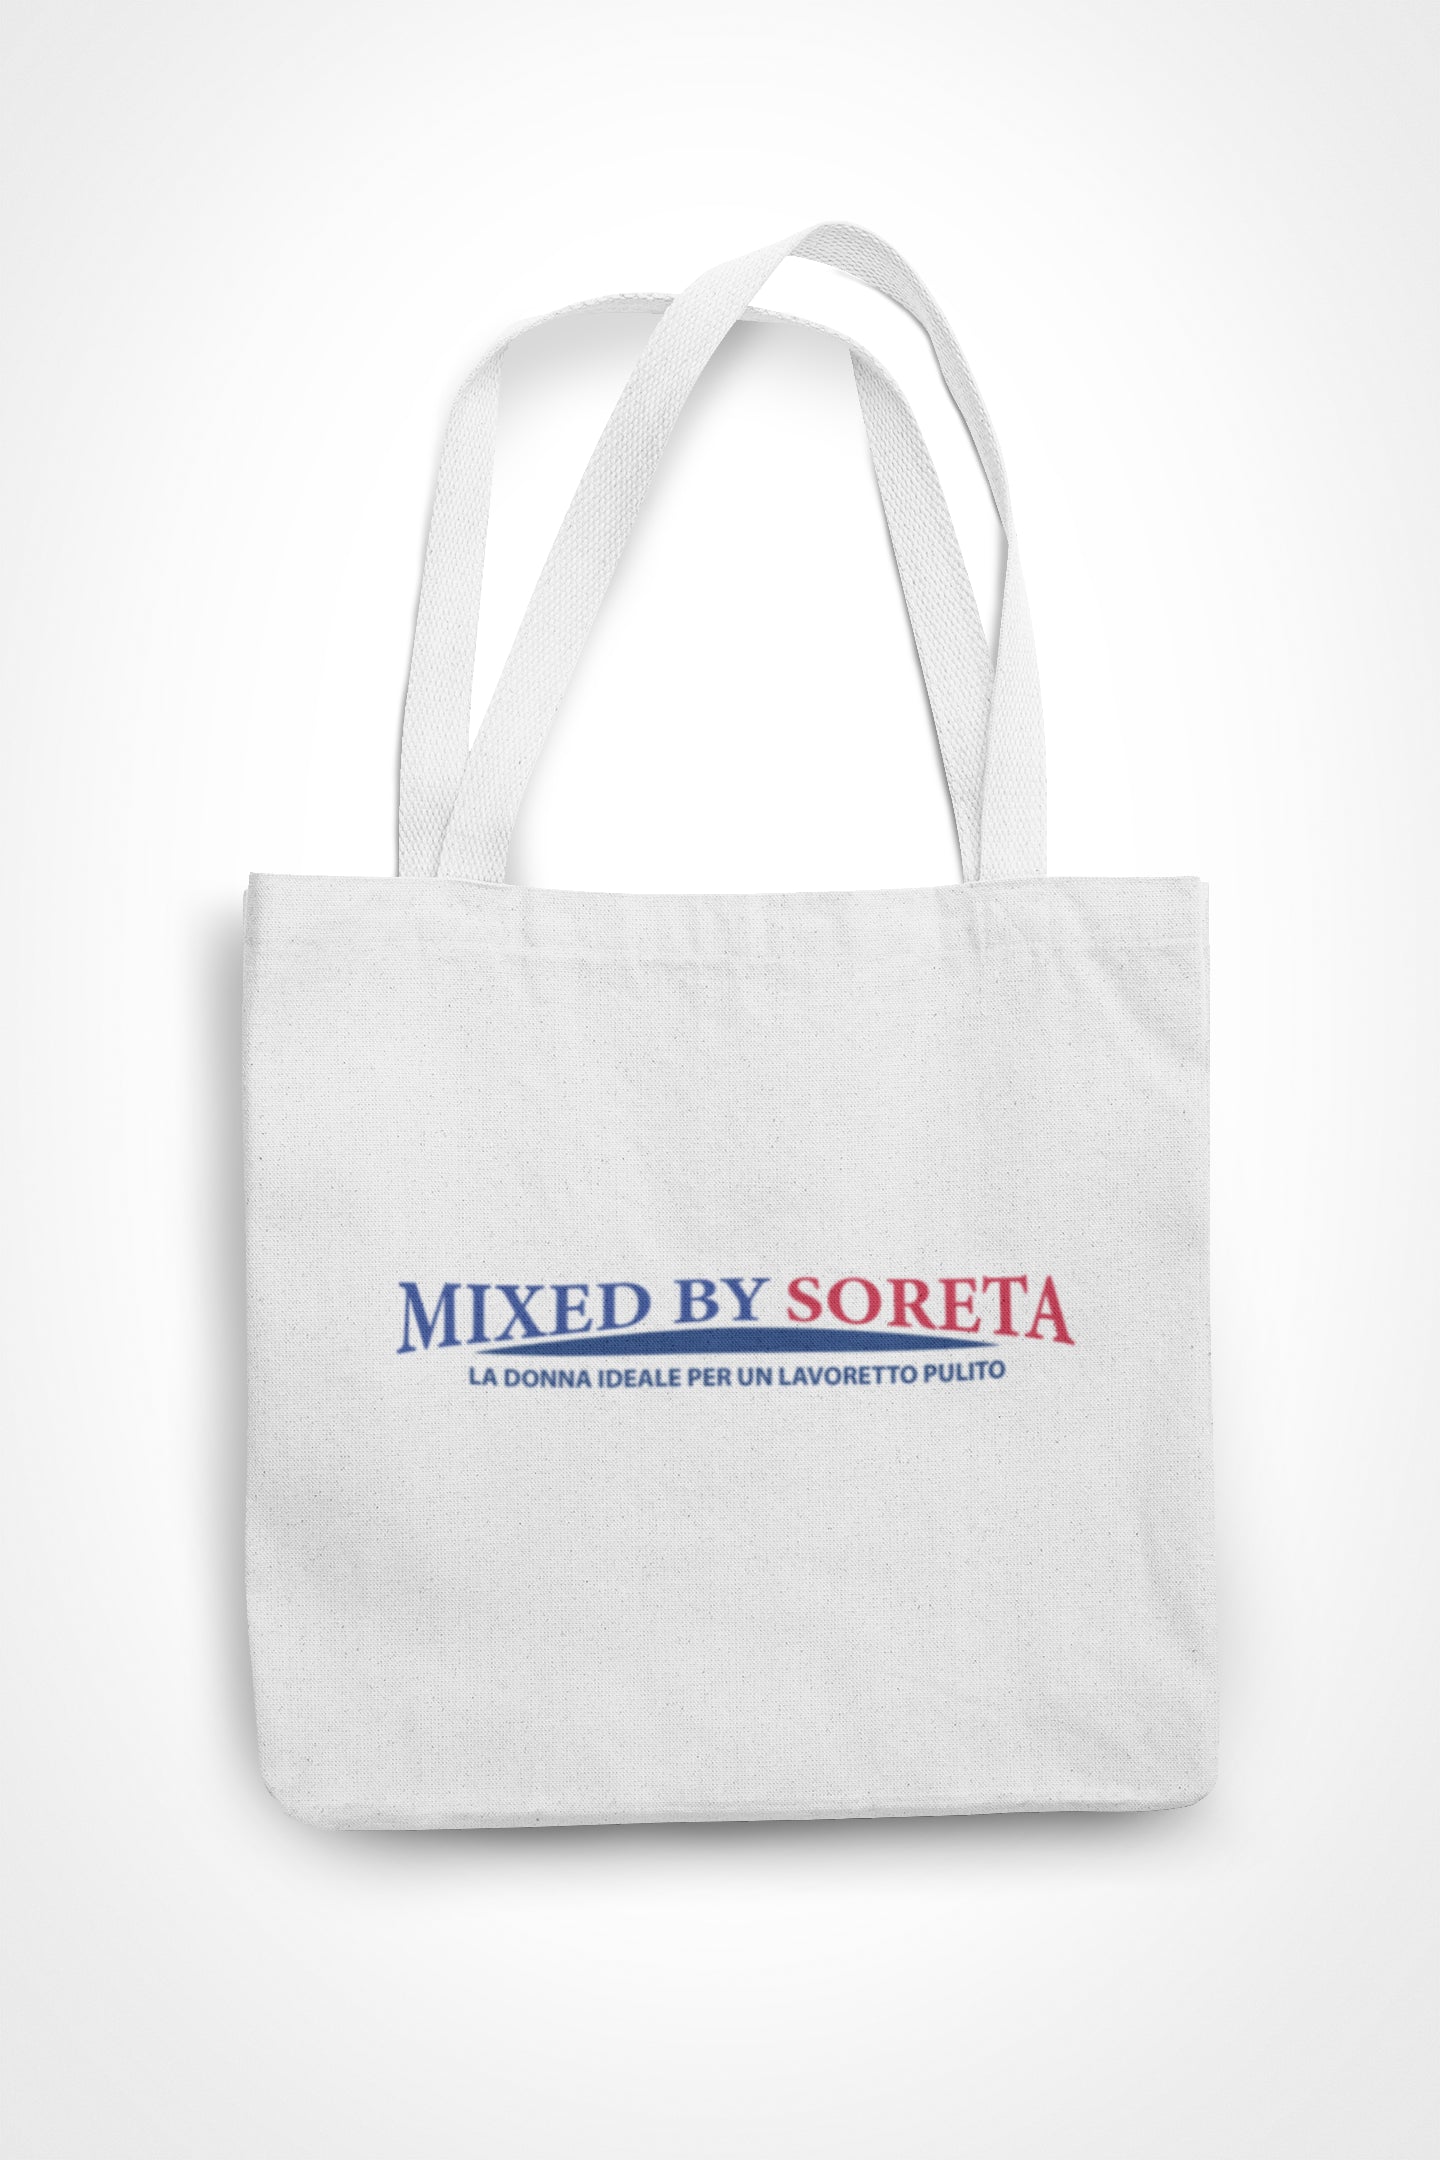 shopping bag bag-terrone mixed by soreta the ideal woman for a clean, fun job nice gift mum dad colleagues friends